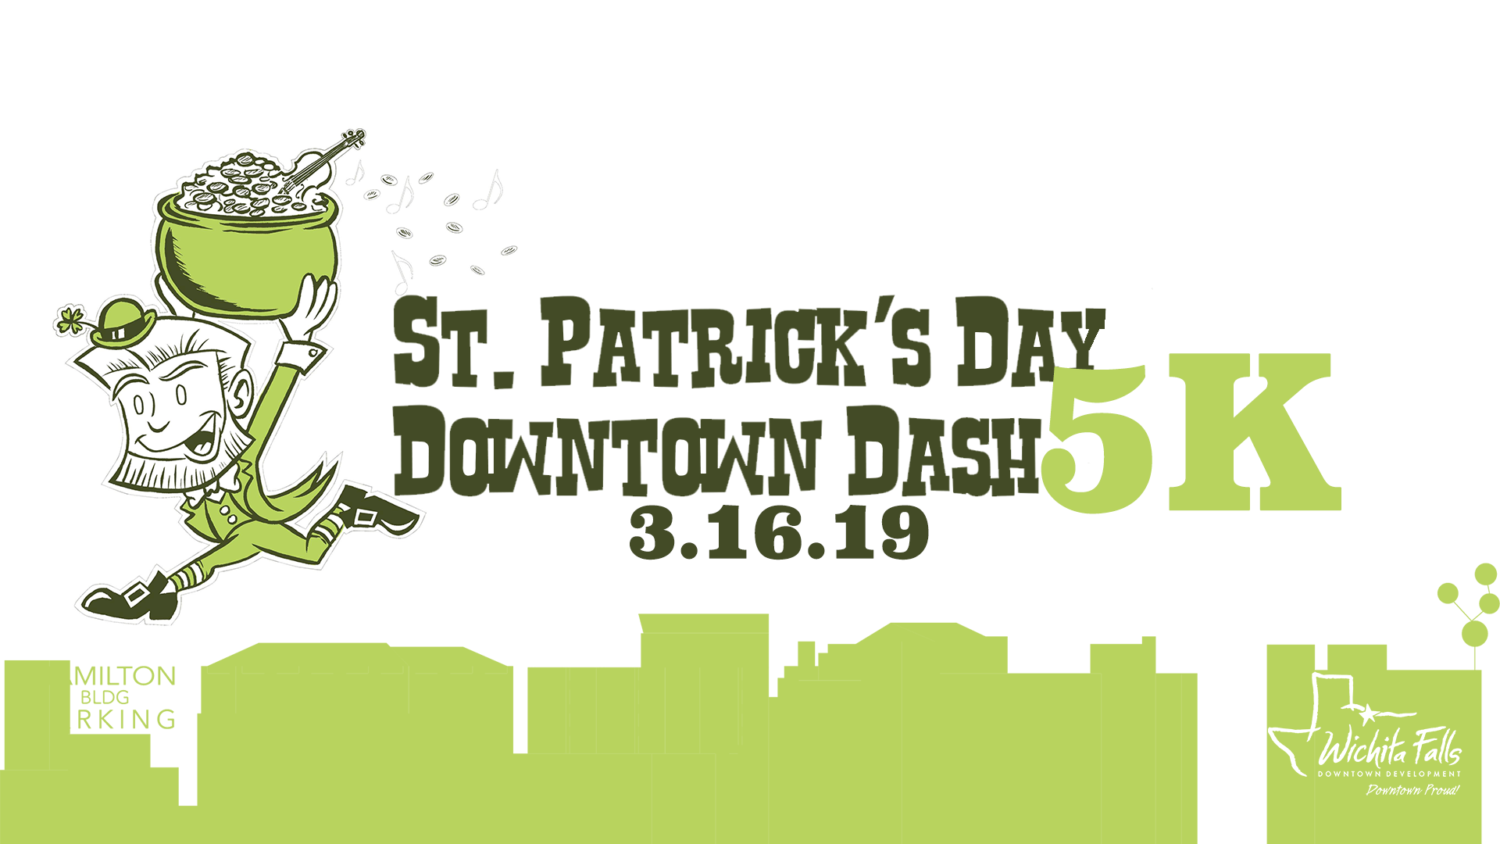 Downtown Dash 5K logo on RaceRaves